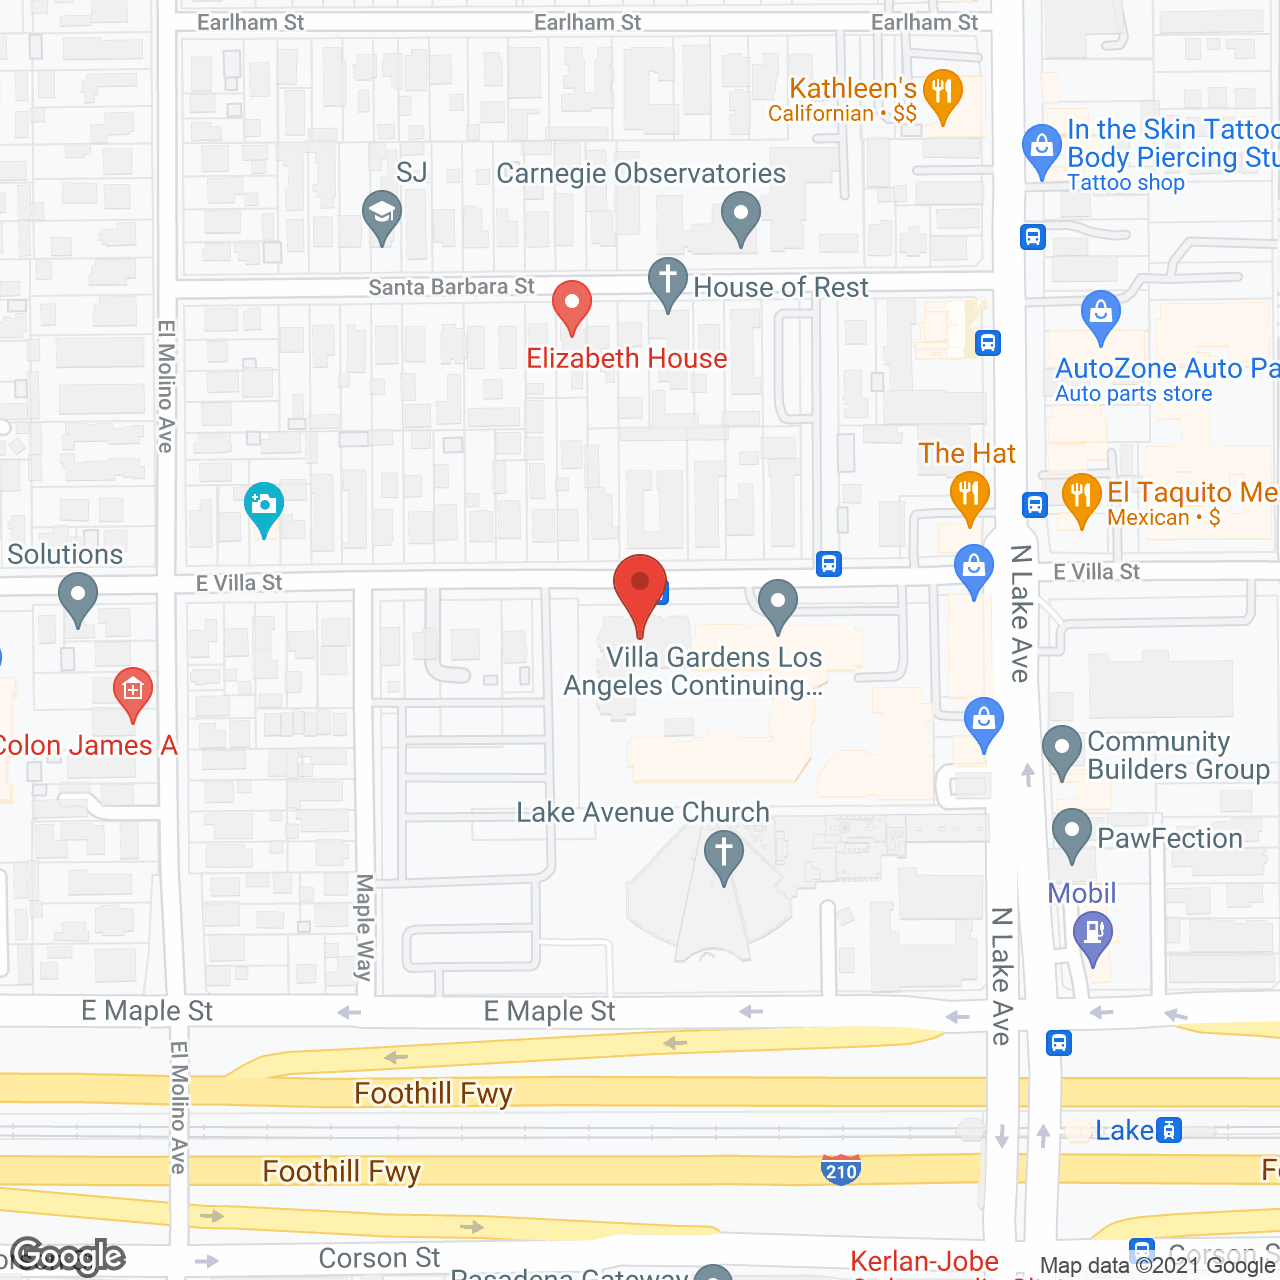 Villa Gardens in google map